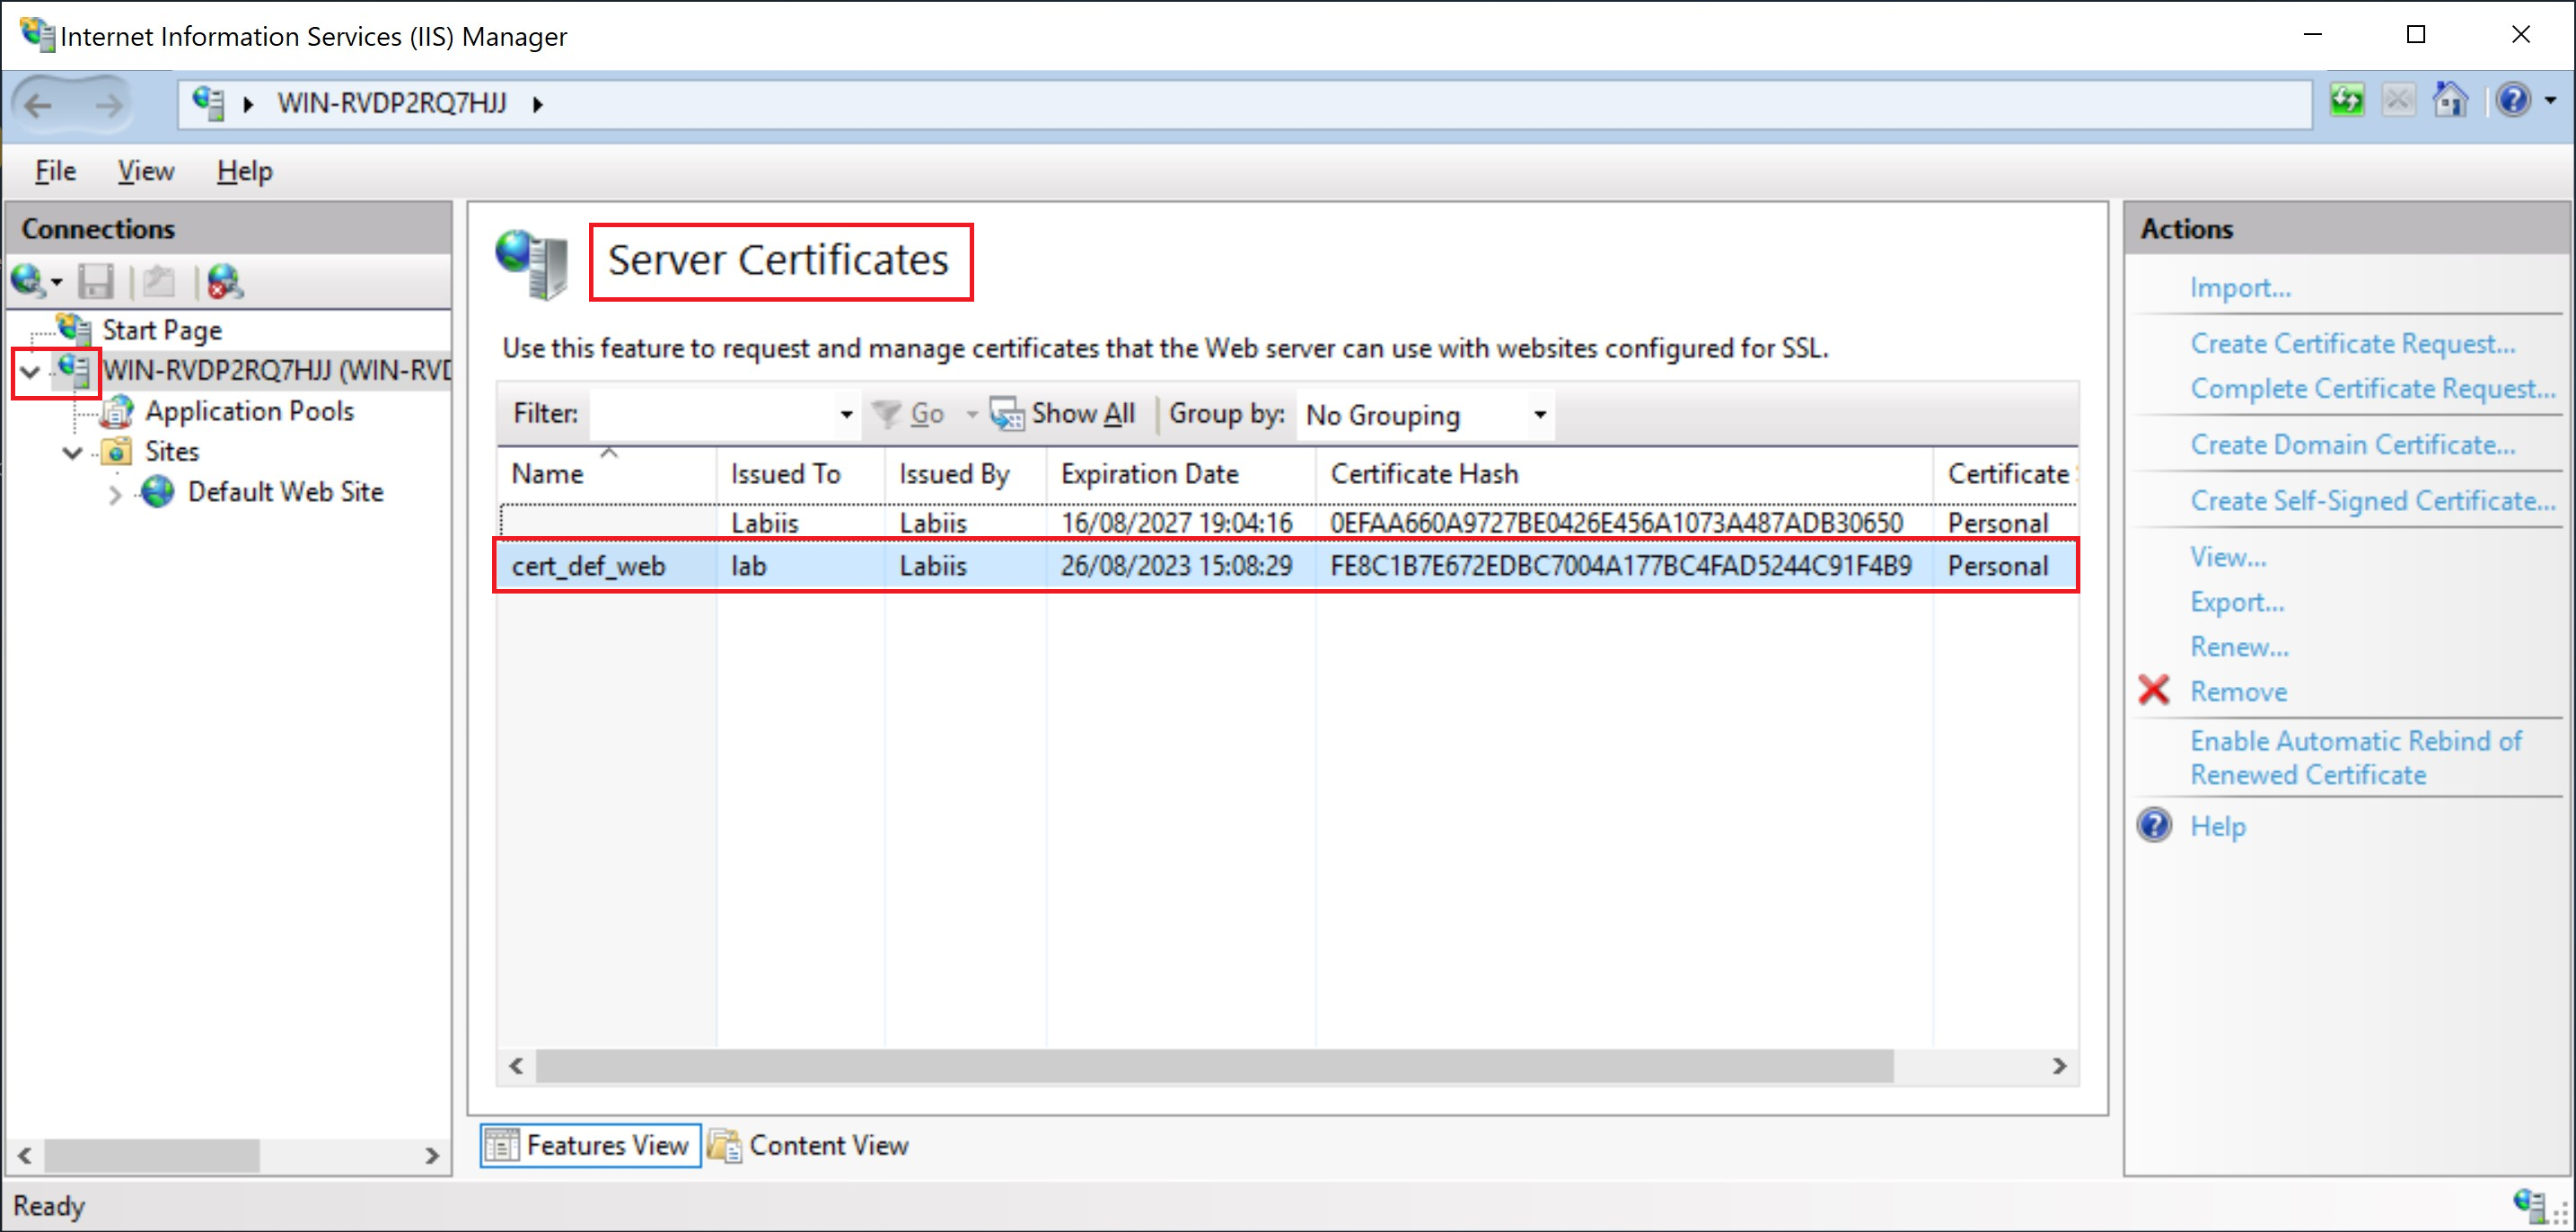 _IIS Manager_, lista de certificados SSL